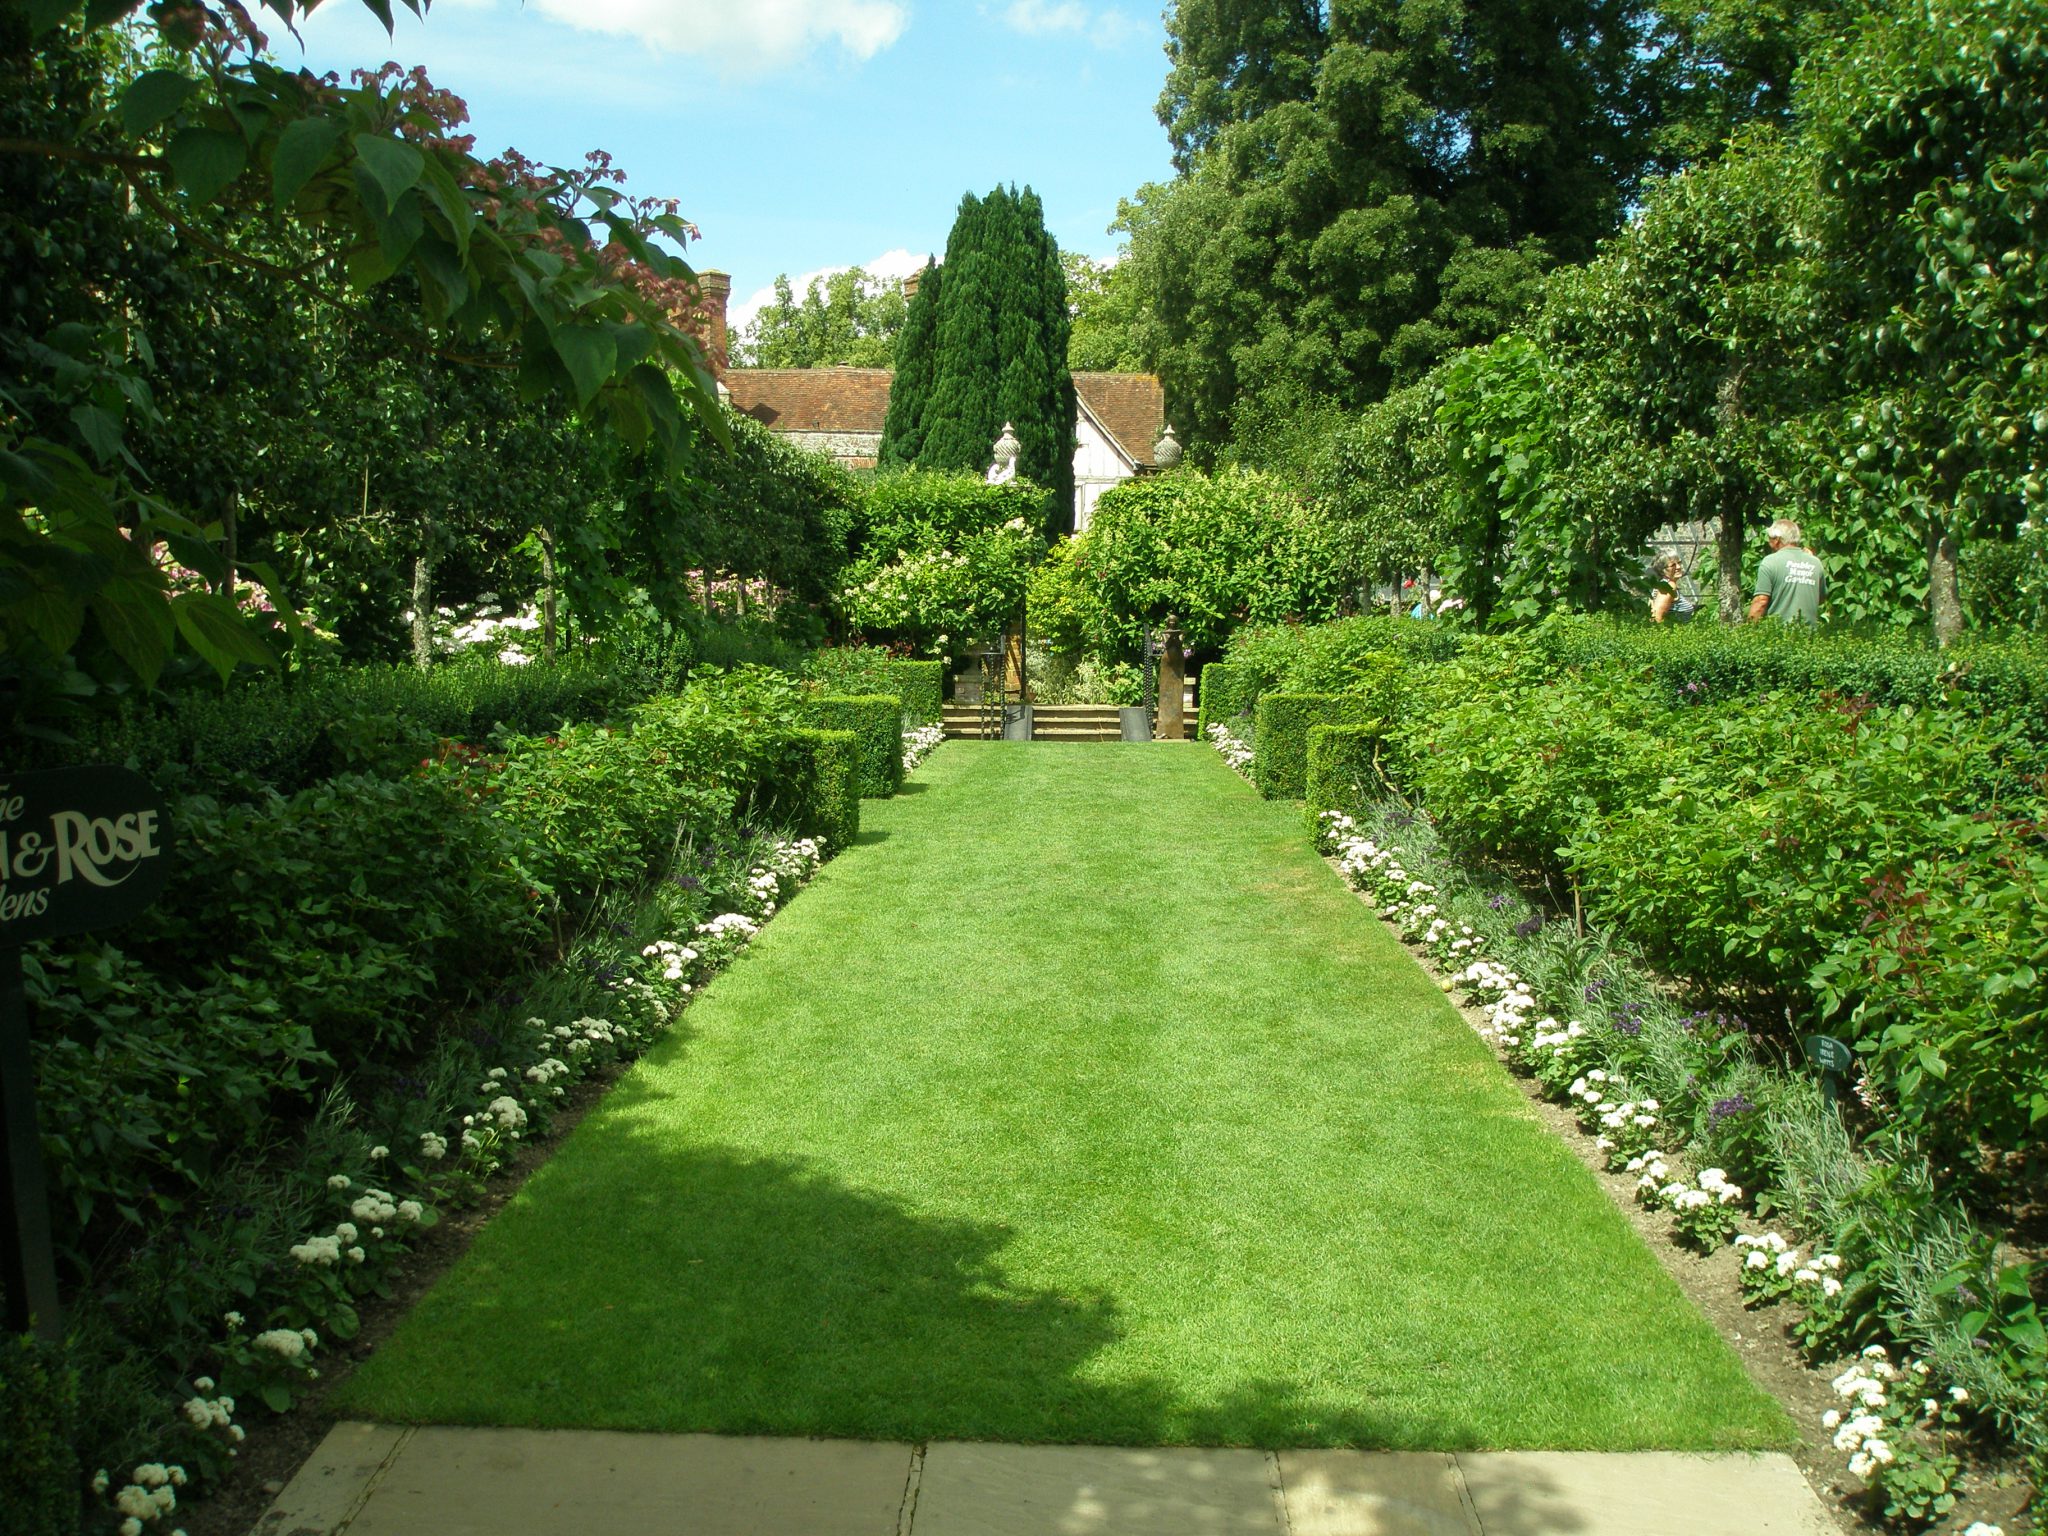 The Rose Garden, within the Walled Garden